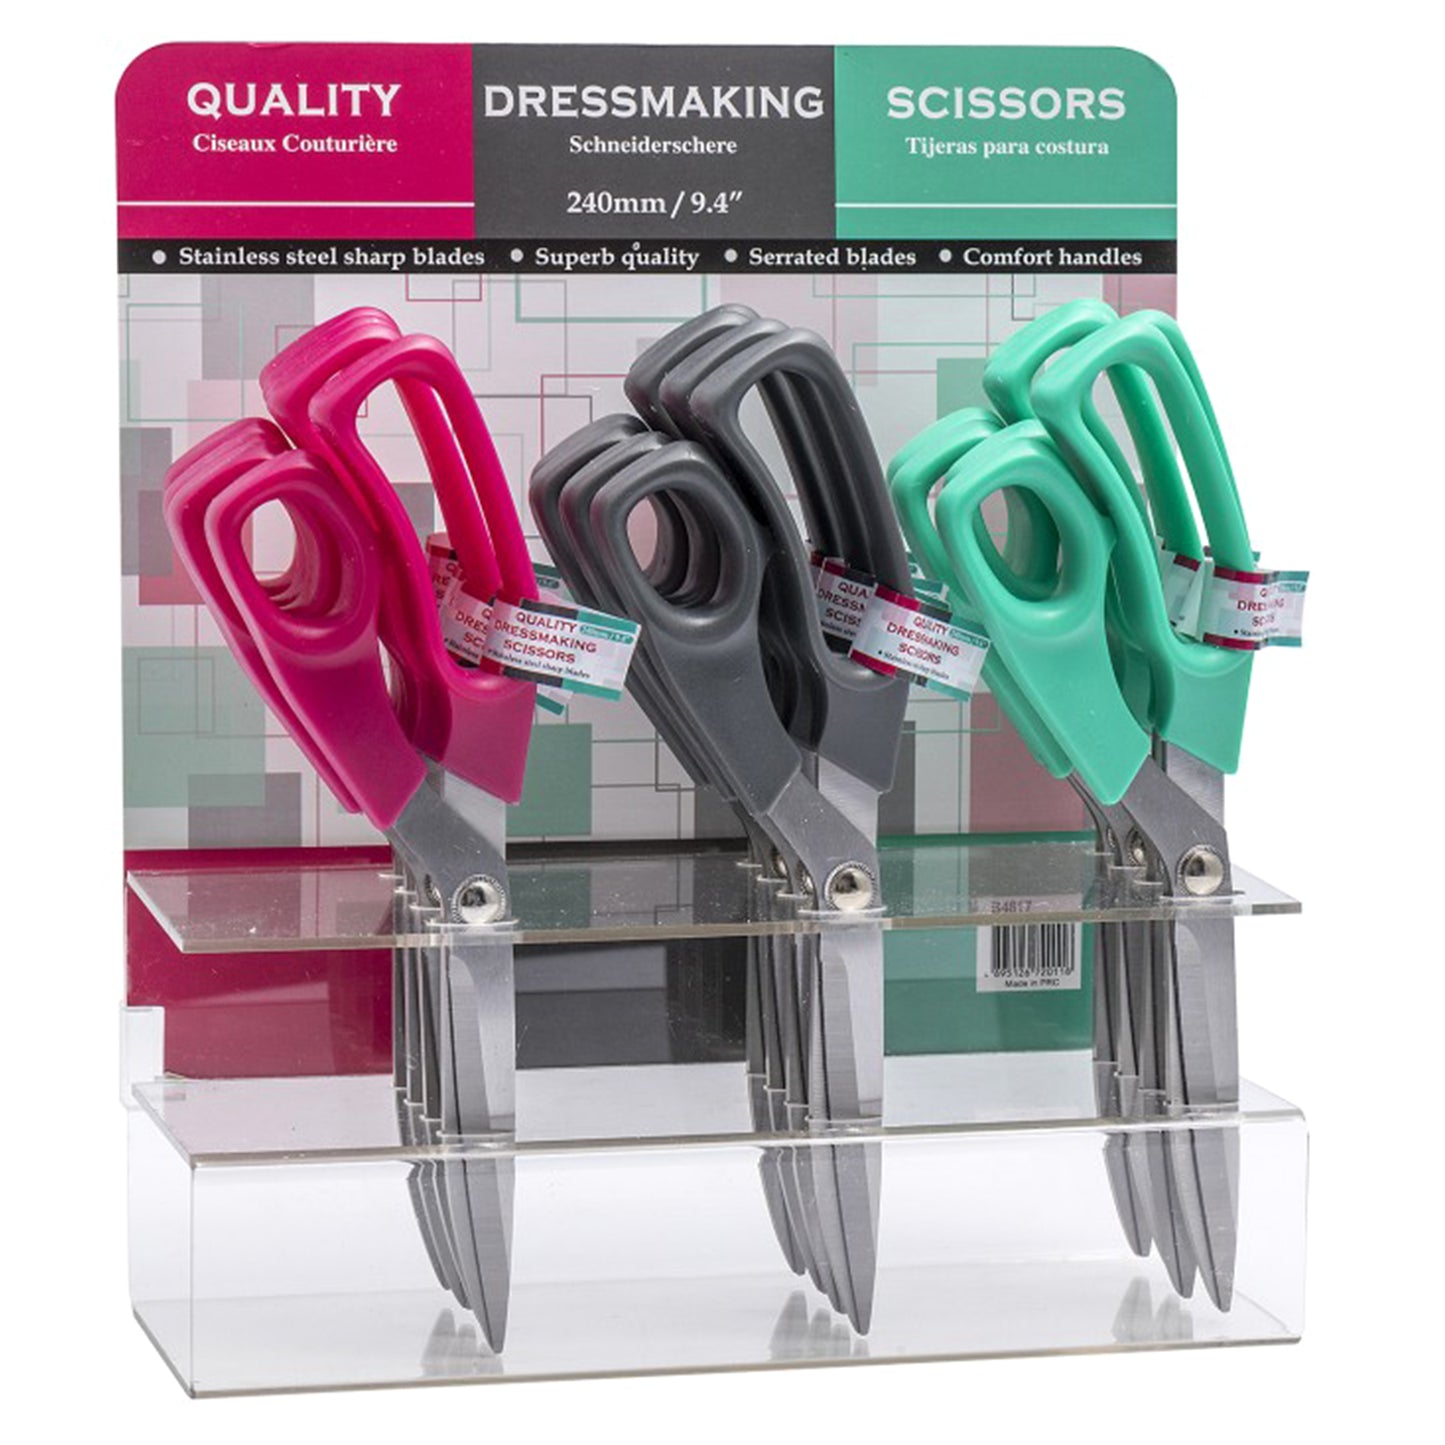 Dressmaking Scissors